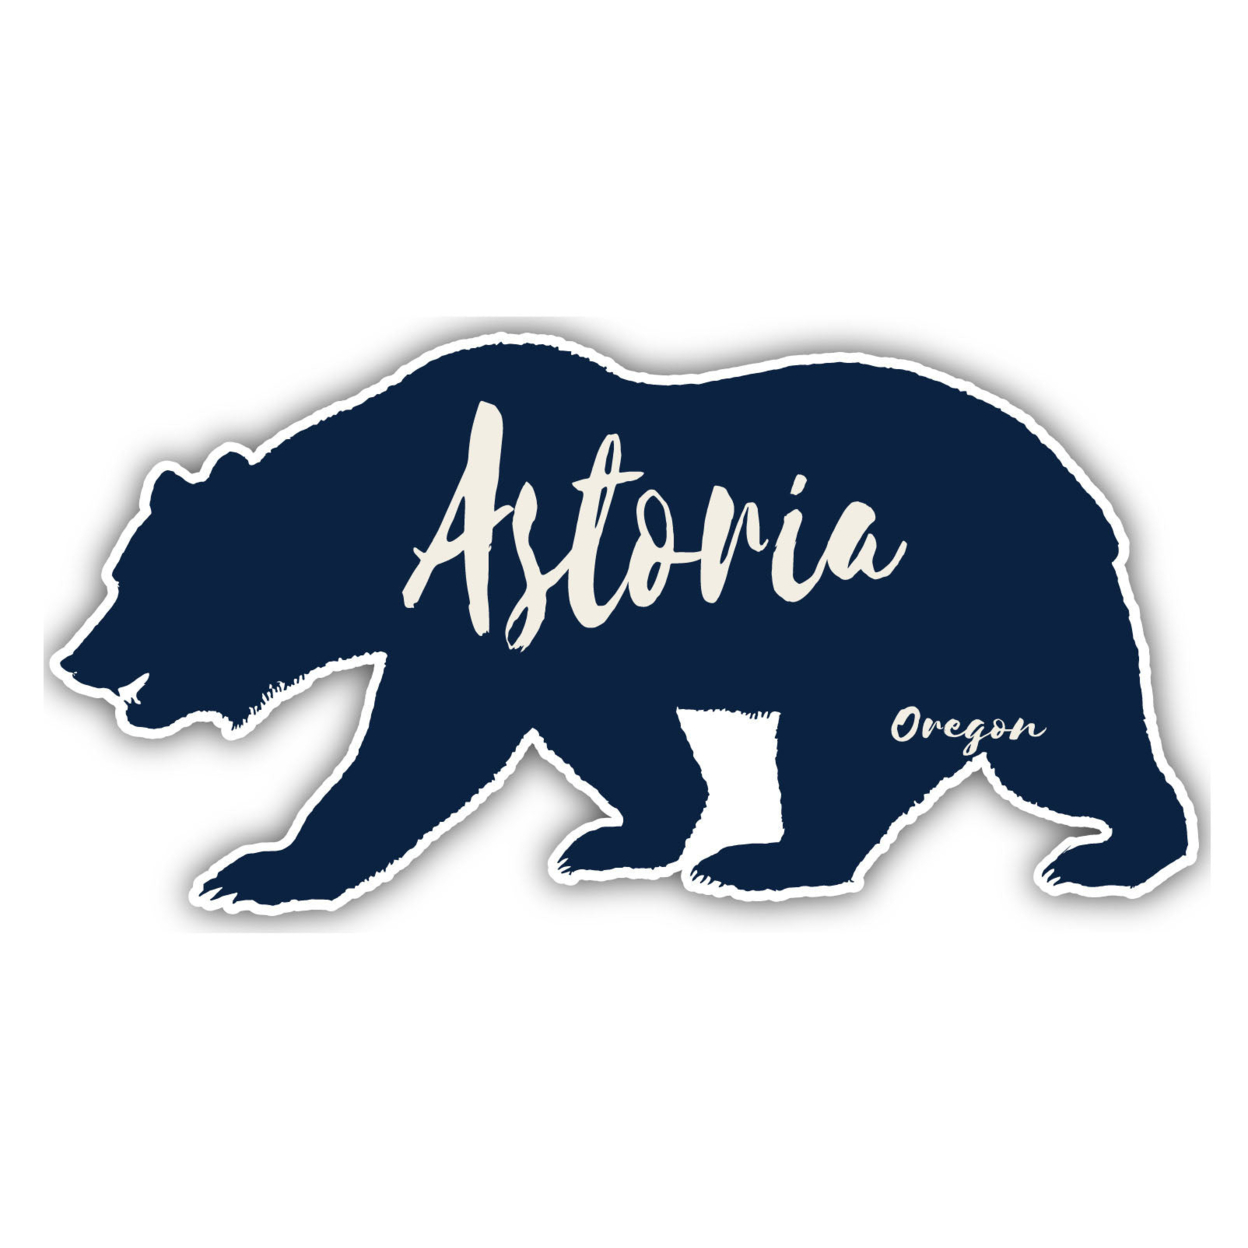 Astoria Oregon Souvenir Decorative Stickers (Choose Theme And Size) - Single Unit, 10-Inch, Tent